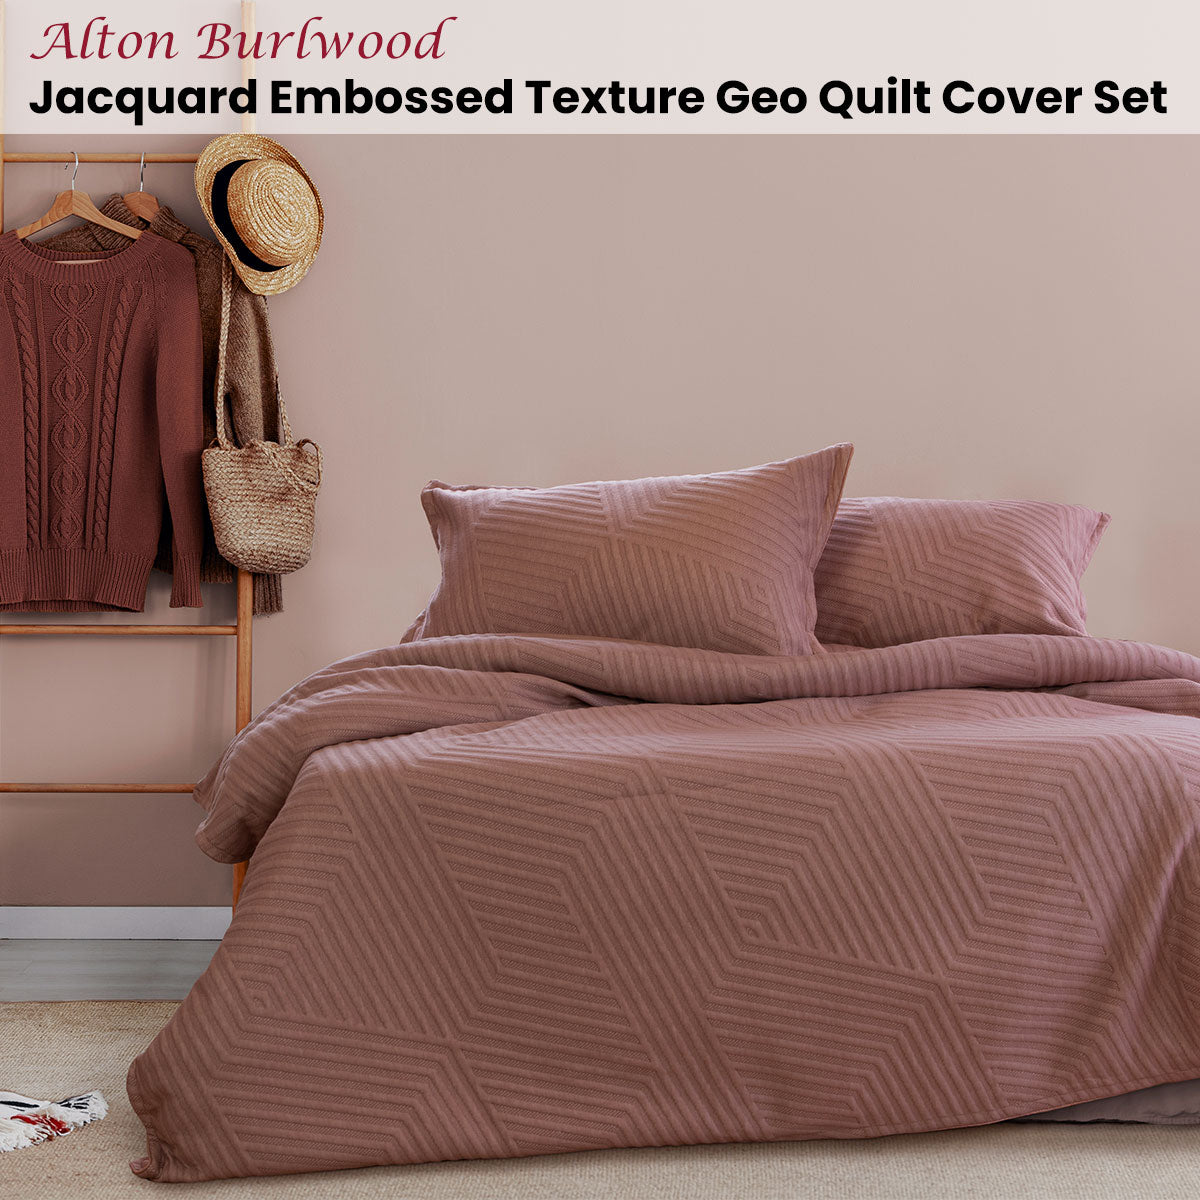 KING Jacquard Embossed Texture Geo Quilt Cover Set - Burlwood